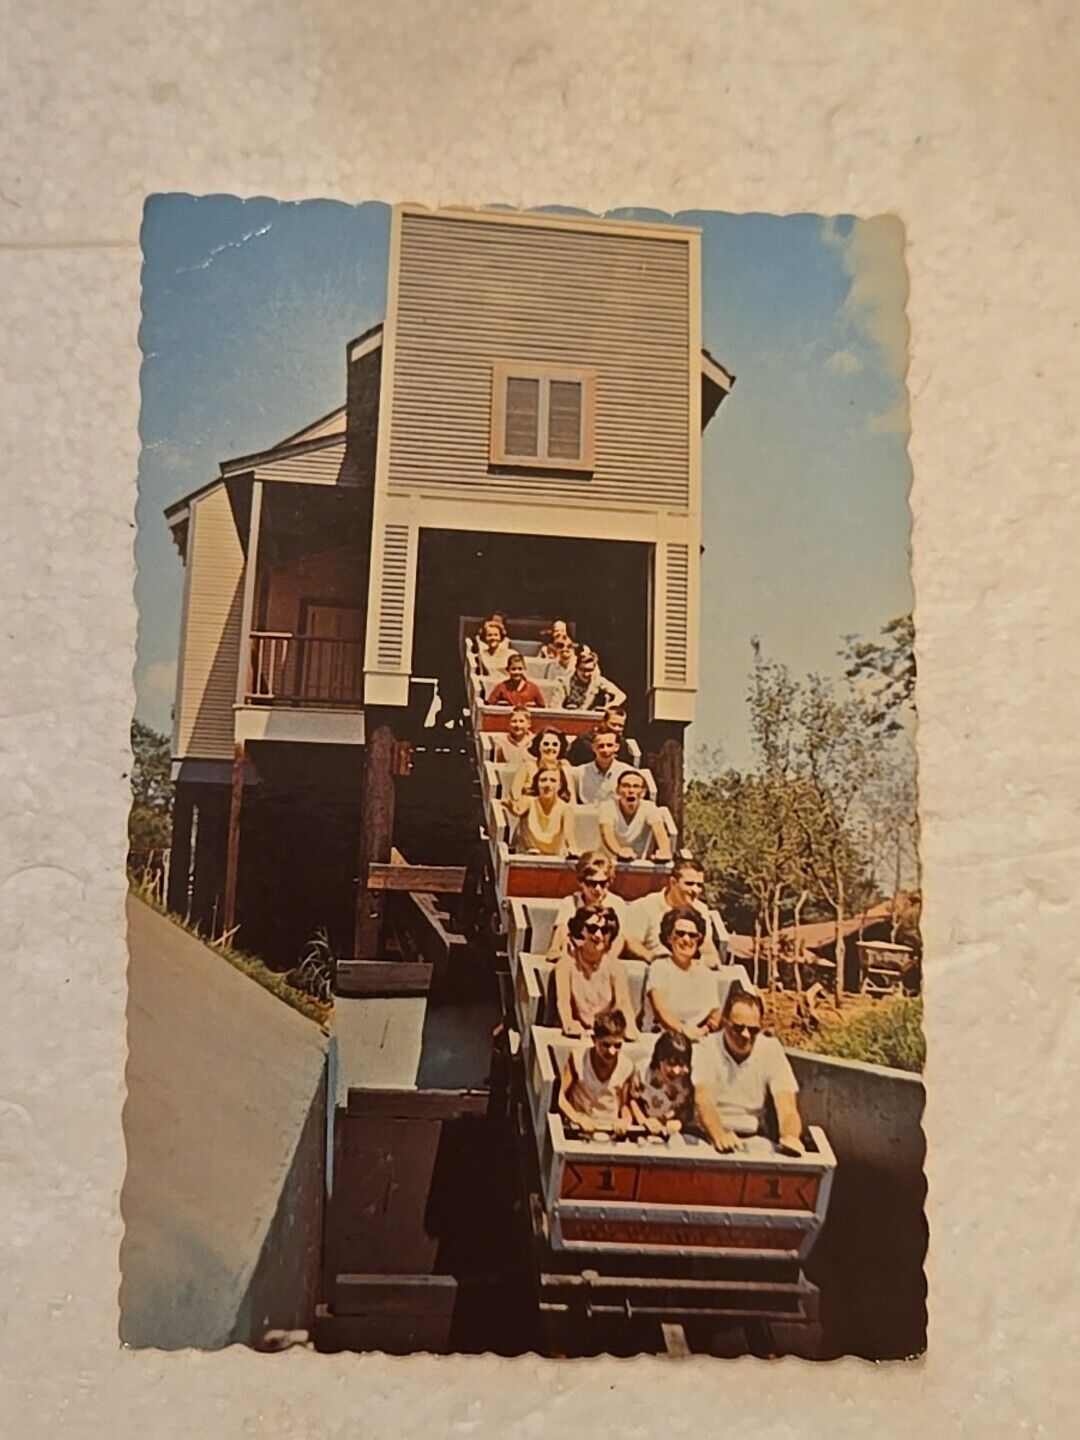 Postcard Six Flags Over Texas Run-A-Way Mine Train Roller Coaster Ride Vintage